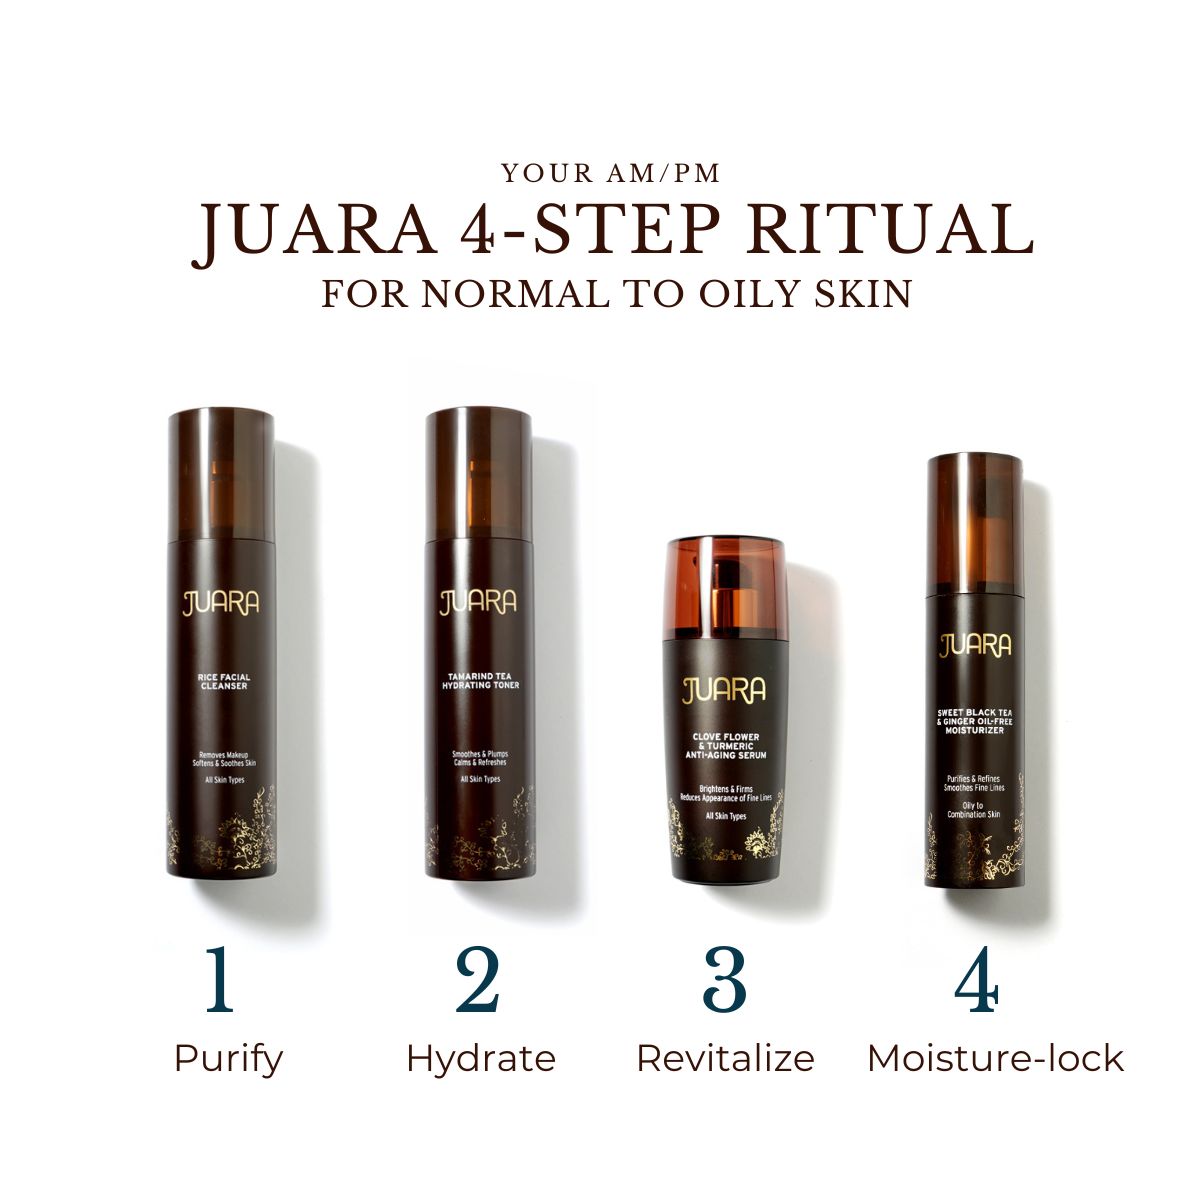 The JUARA Face Ritual for Oily to Combination Skin by JUARA Skincare